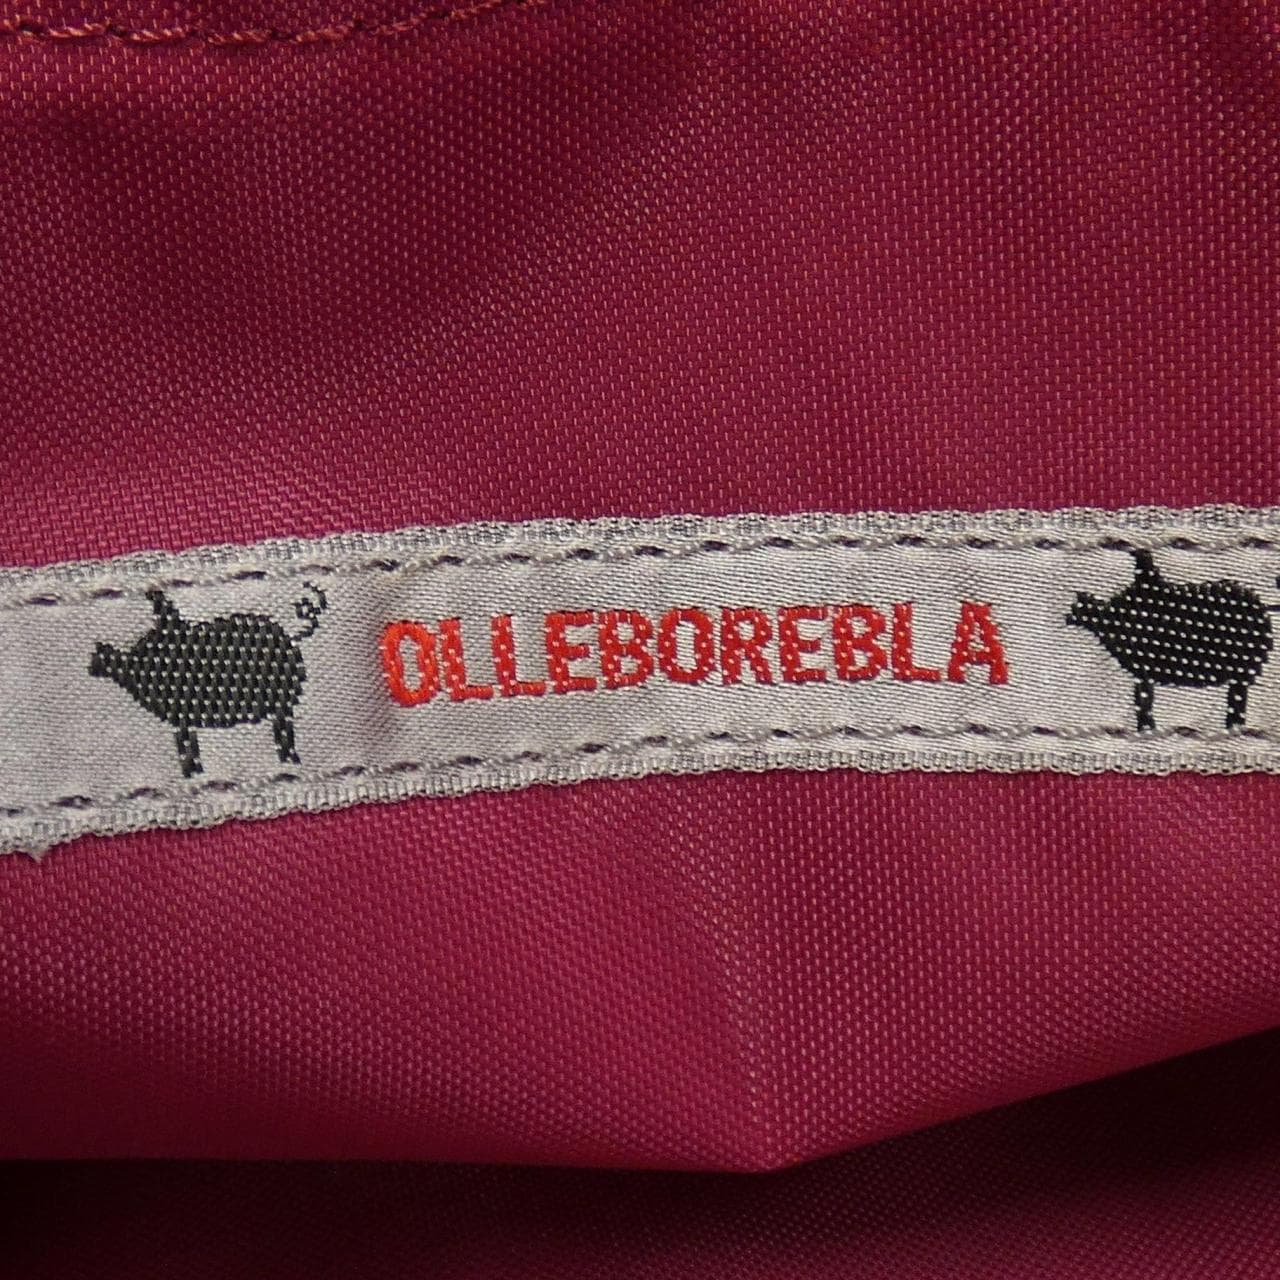 OLLEBOREBLA BAG